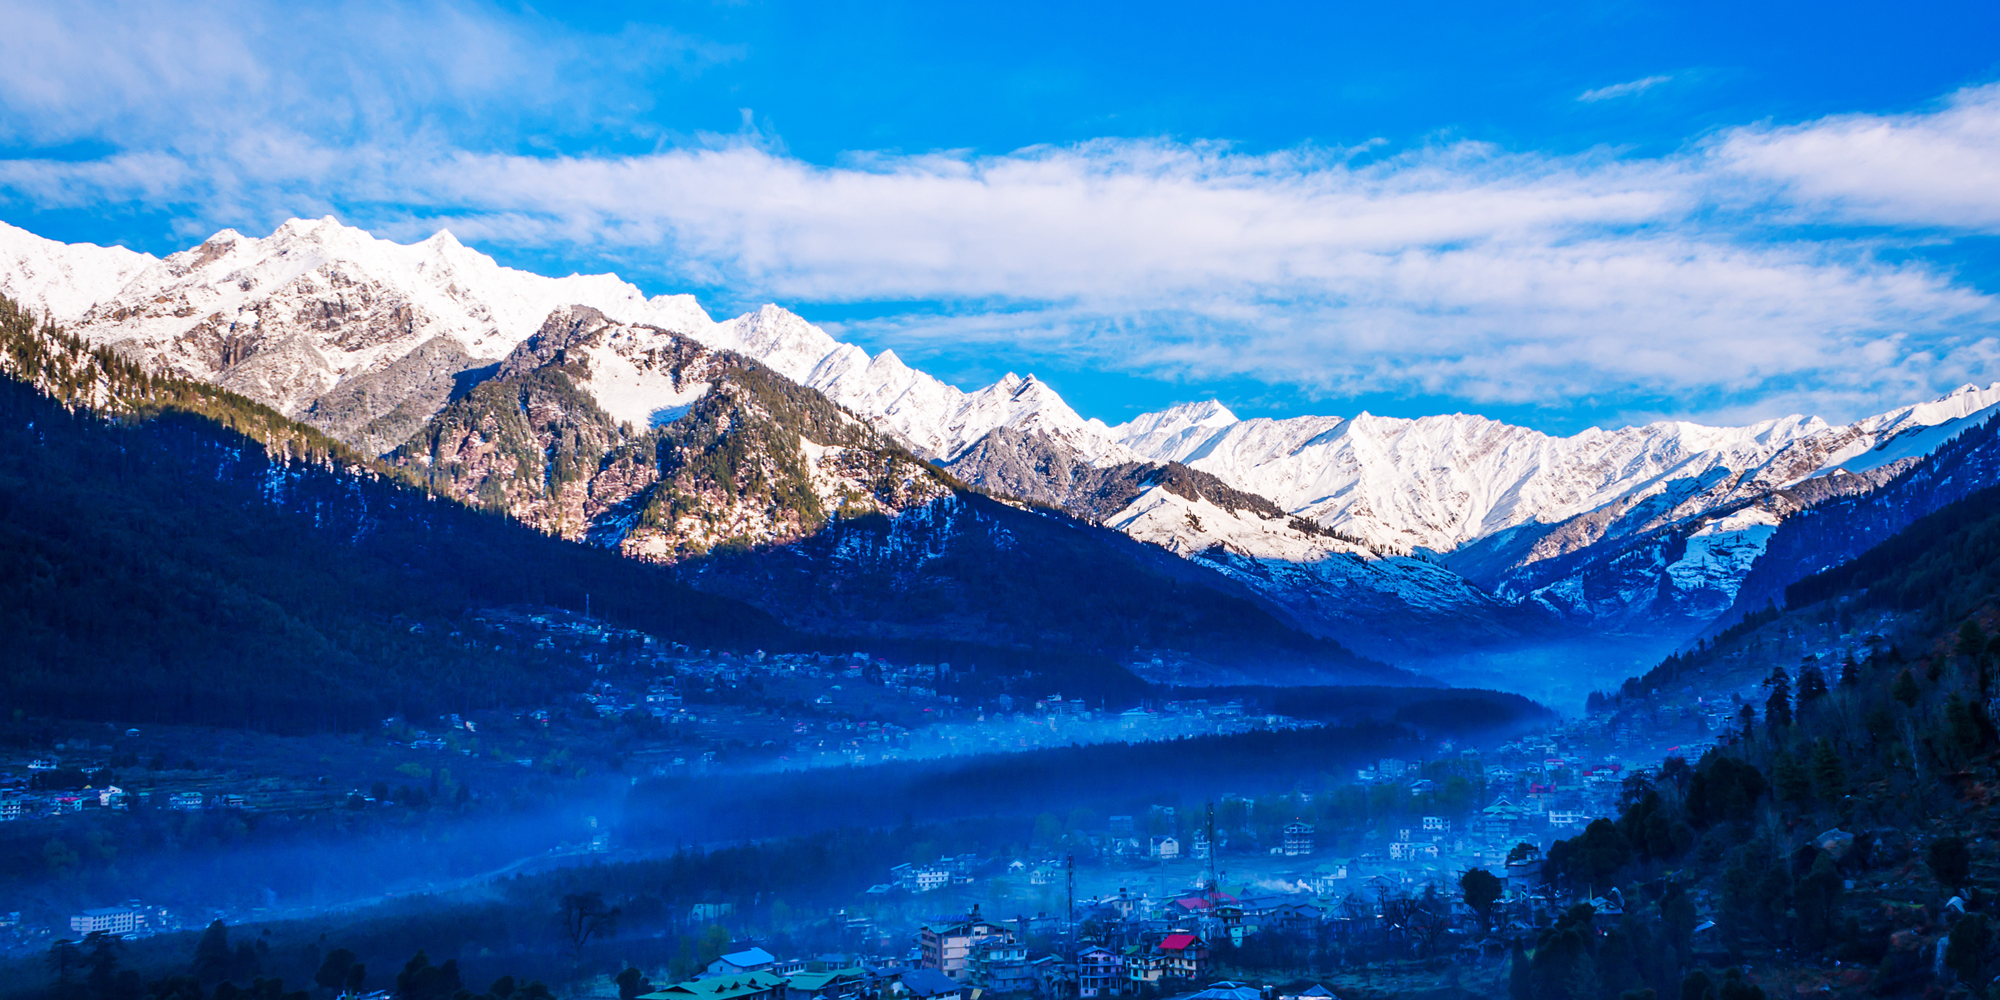 Manali, Himalayan resort town in India’s northern Himachal Pradesh state.